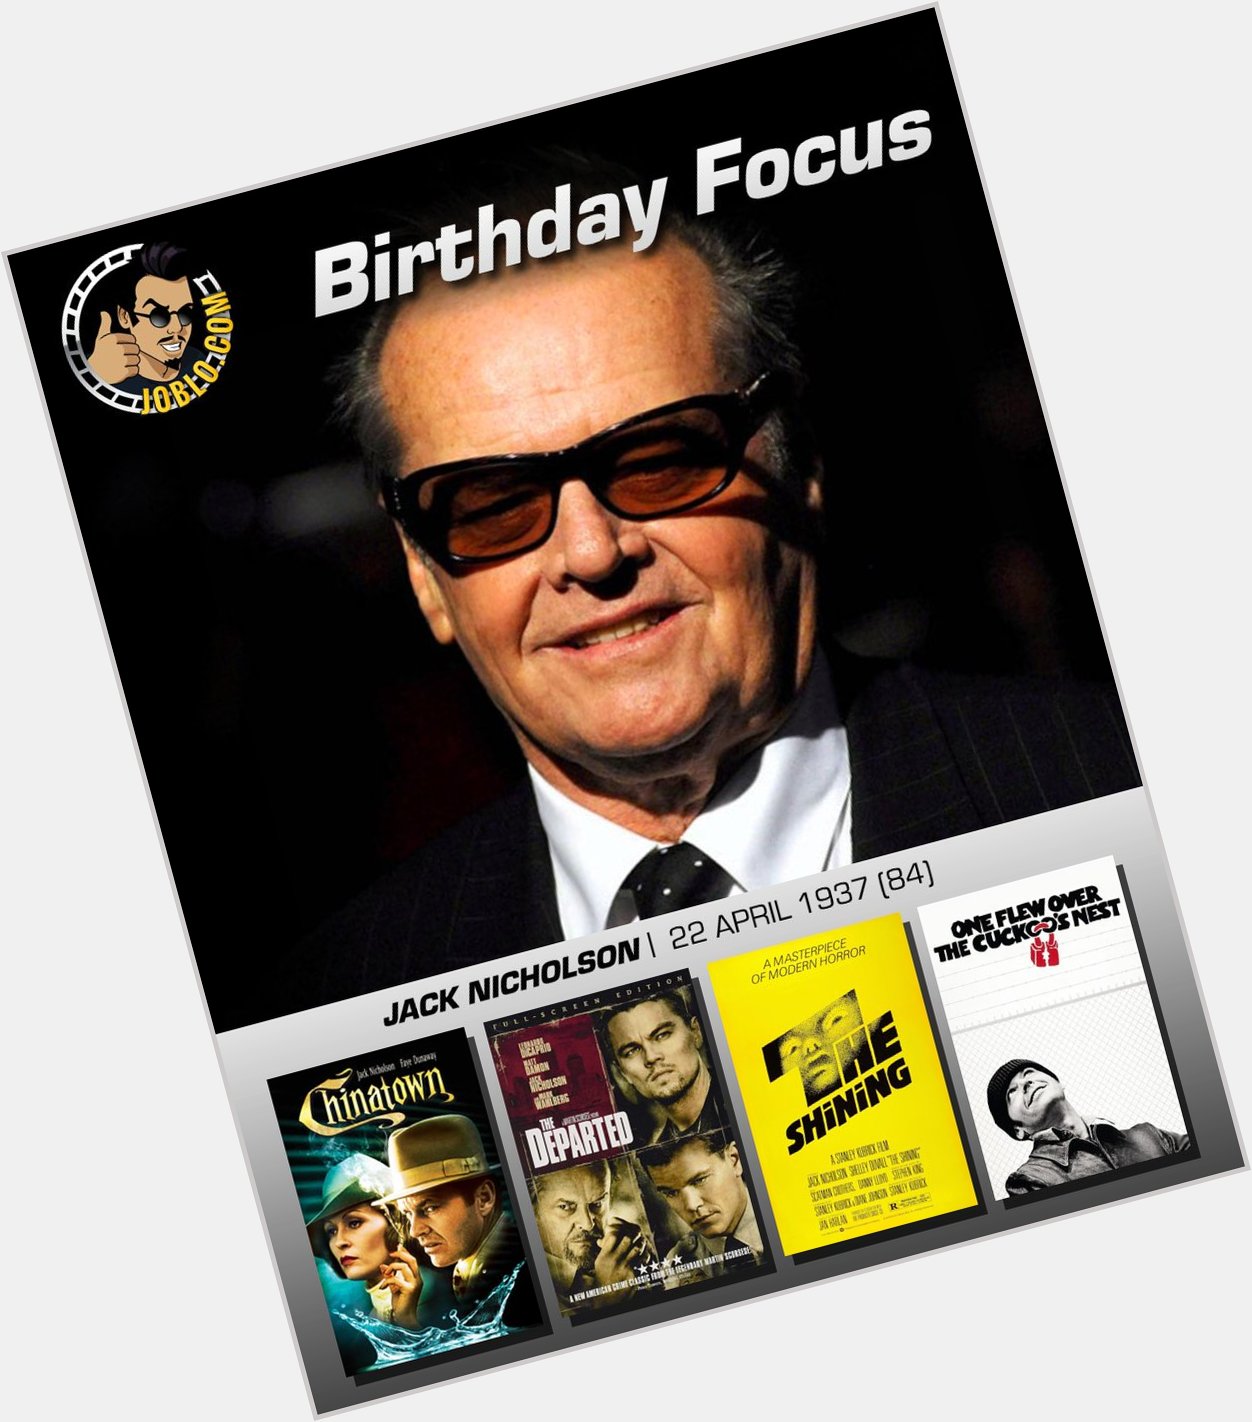 Wishing the great Jack Nicholson a very happy 84th birthday! 